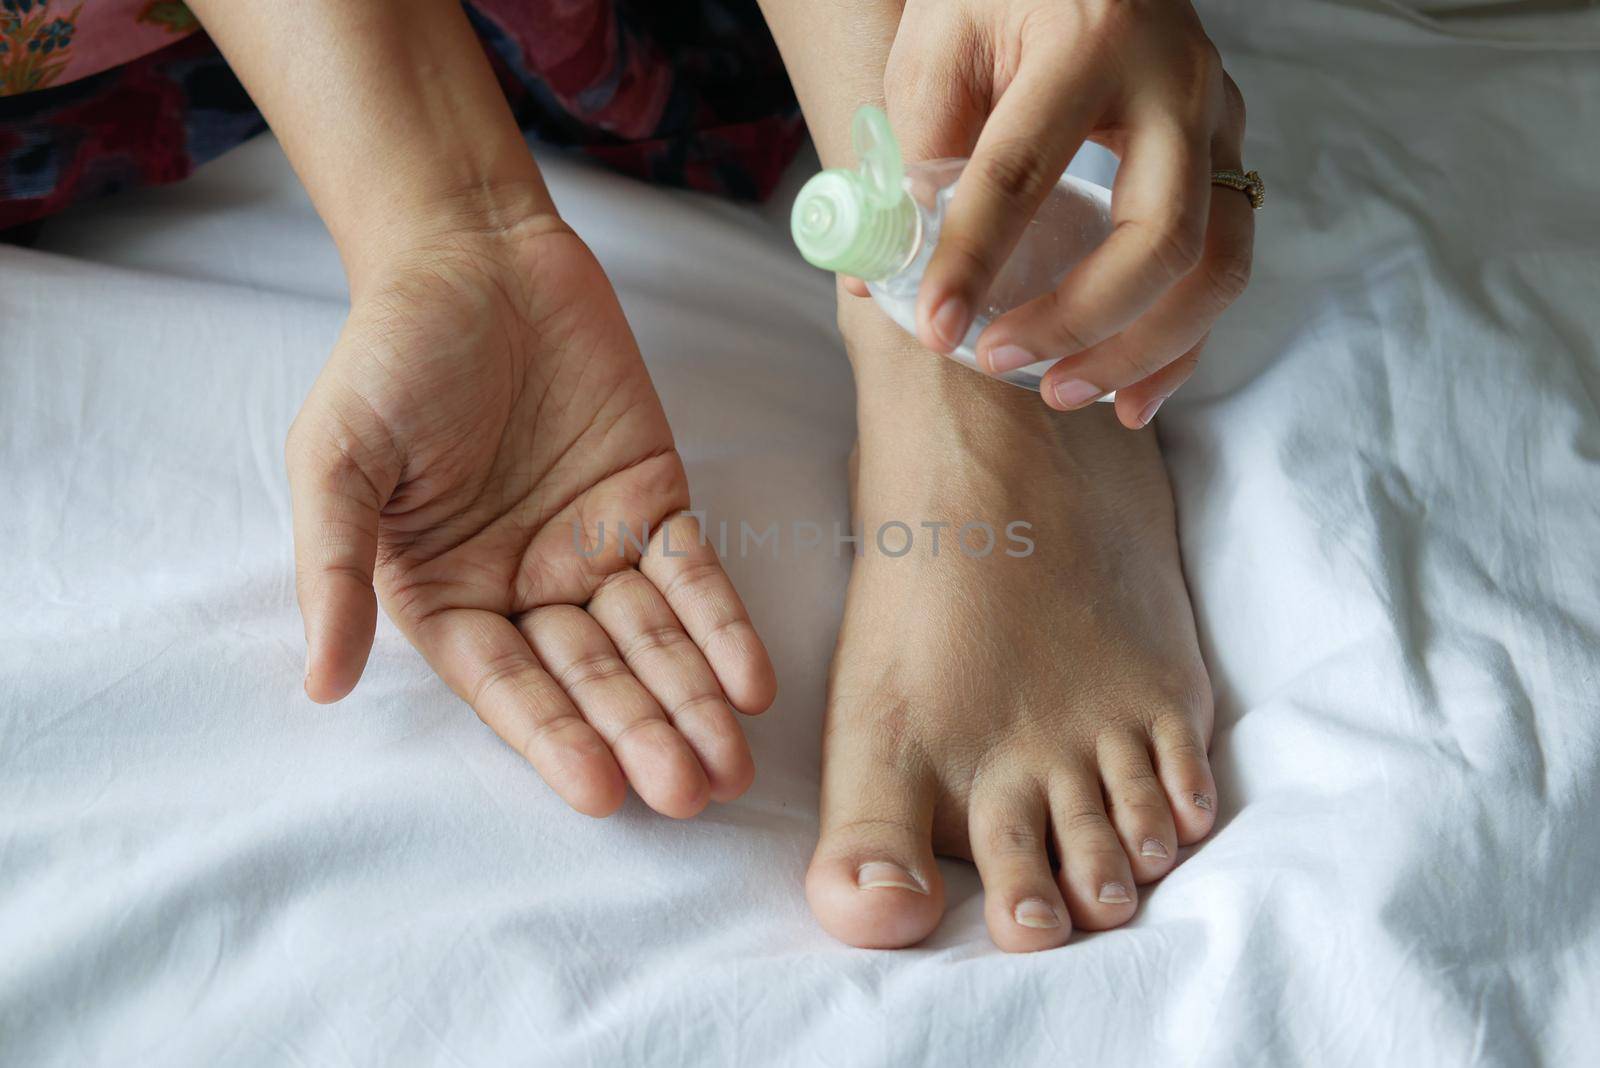 women apply oil on feet on bed